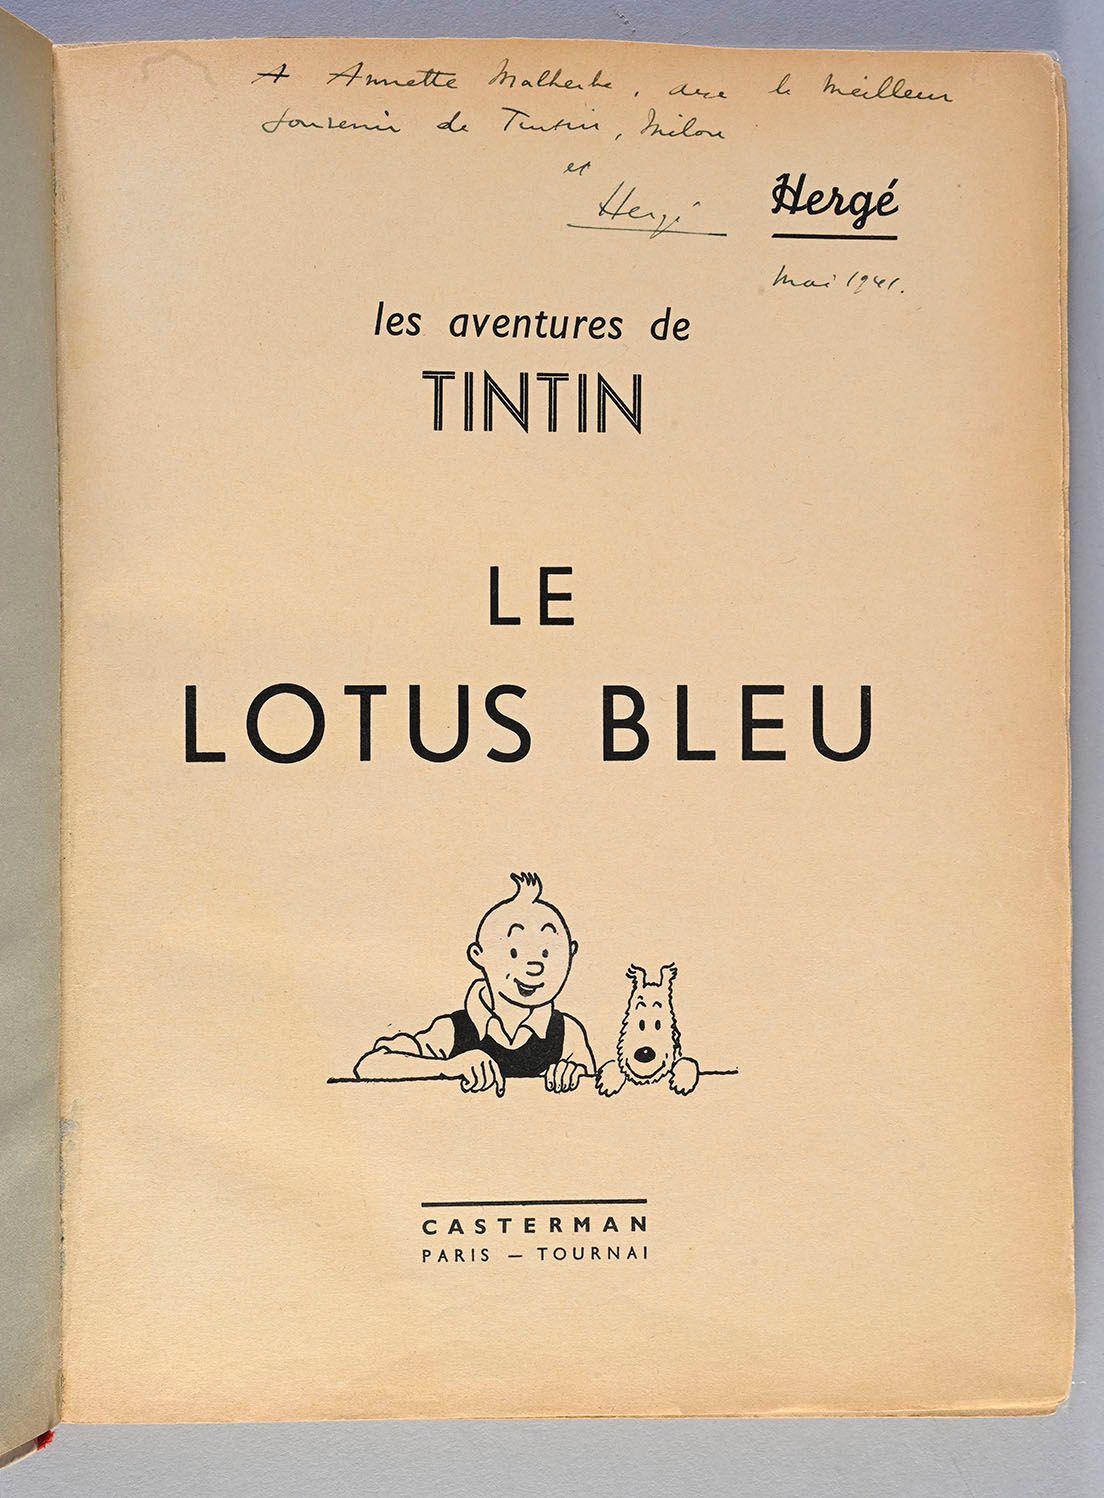 HERGÉ TINTIN 05.蓝莲花的奉献。A9版--1939年。第4版 小胶合画，4色外文，红色胶皮书脊。
蓝色封底。画册状况非常好，并附有Hergé 19&hellip;